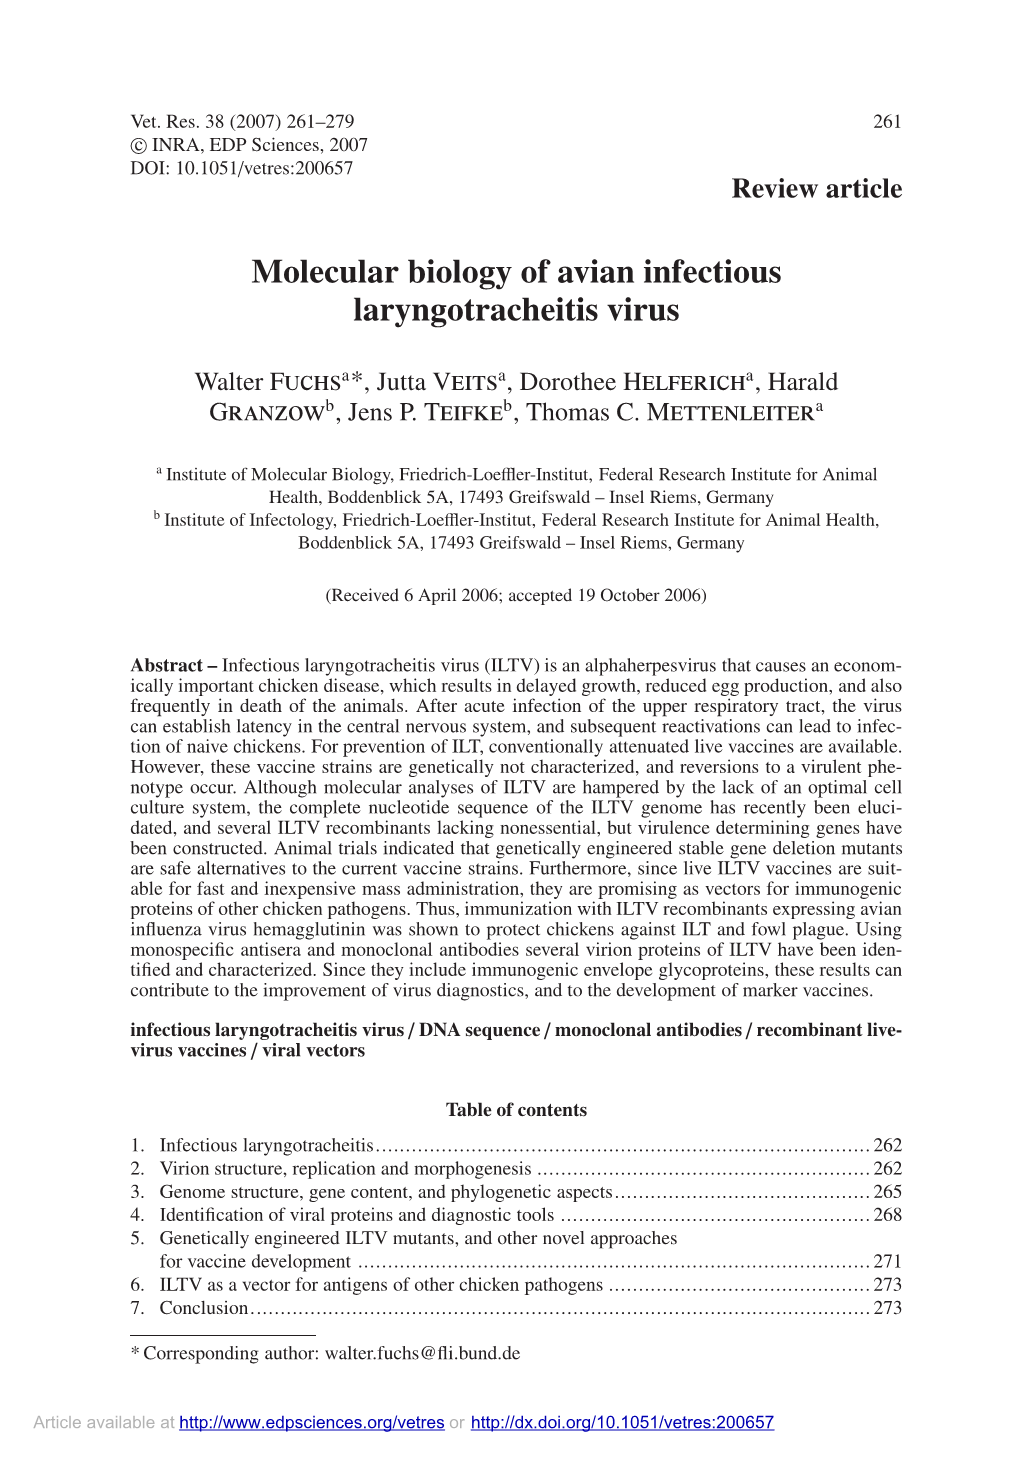 Molecular Biology of Avian Infectious Laryngotracheitis Virus